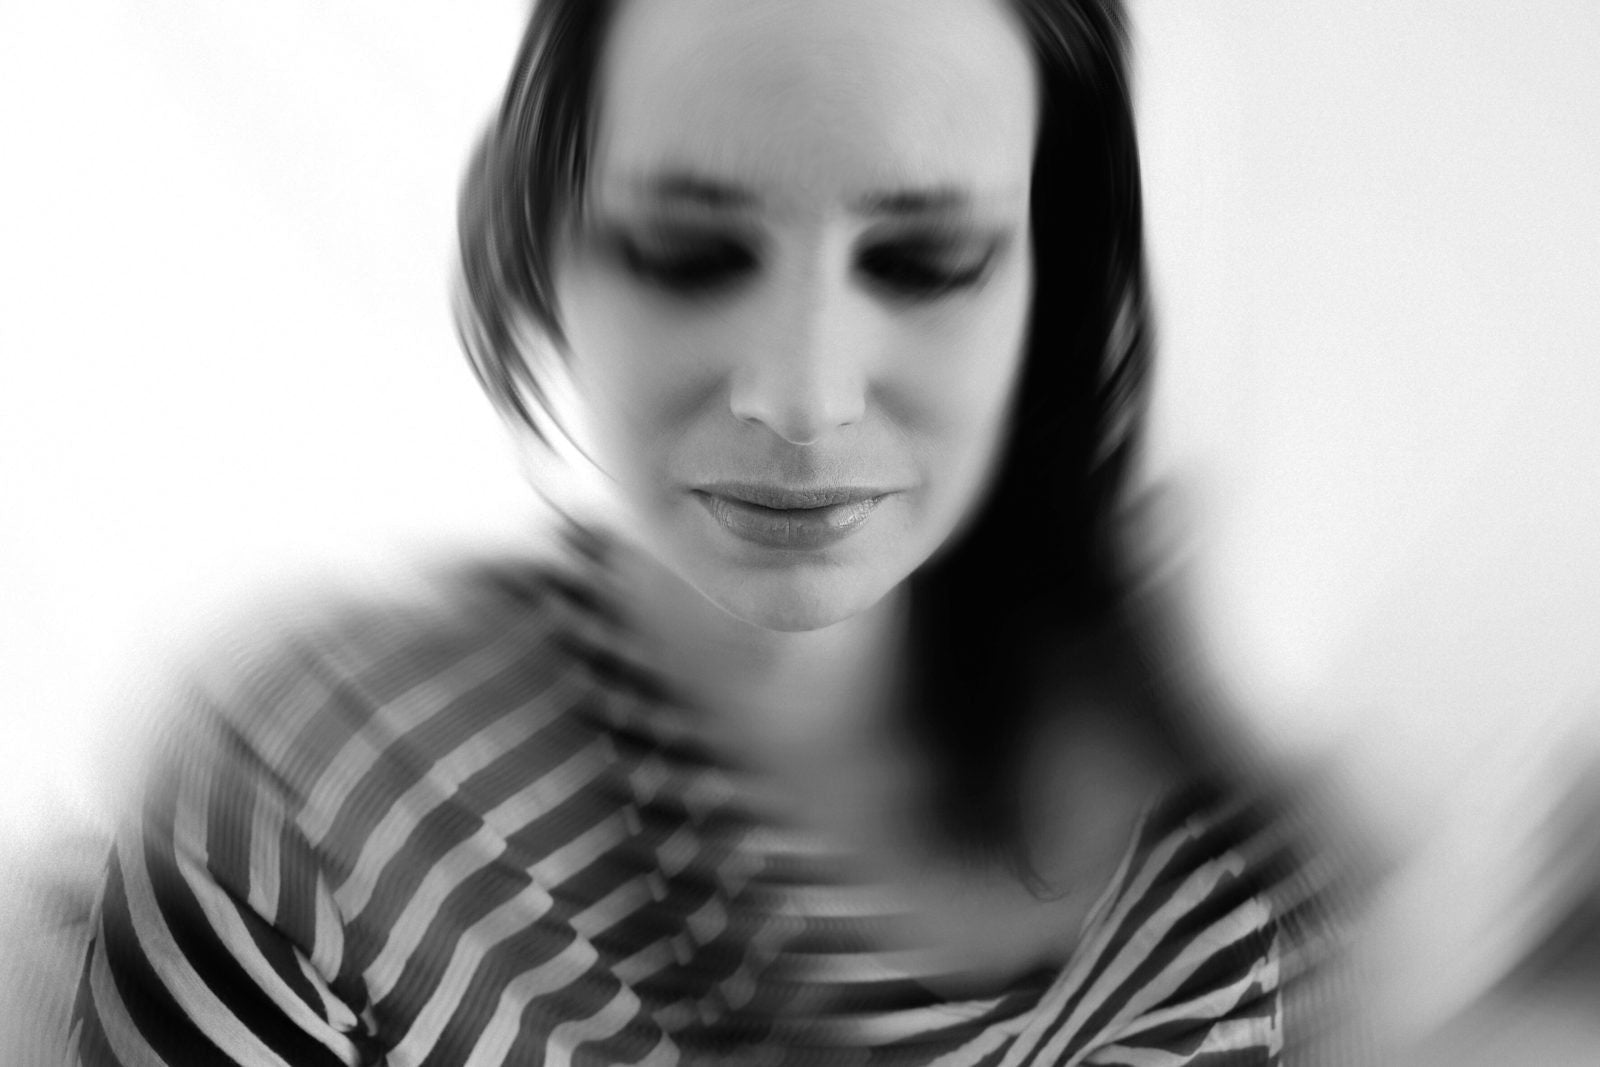 blur image of a sad woman